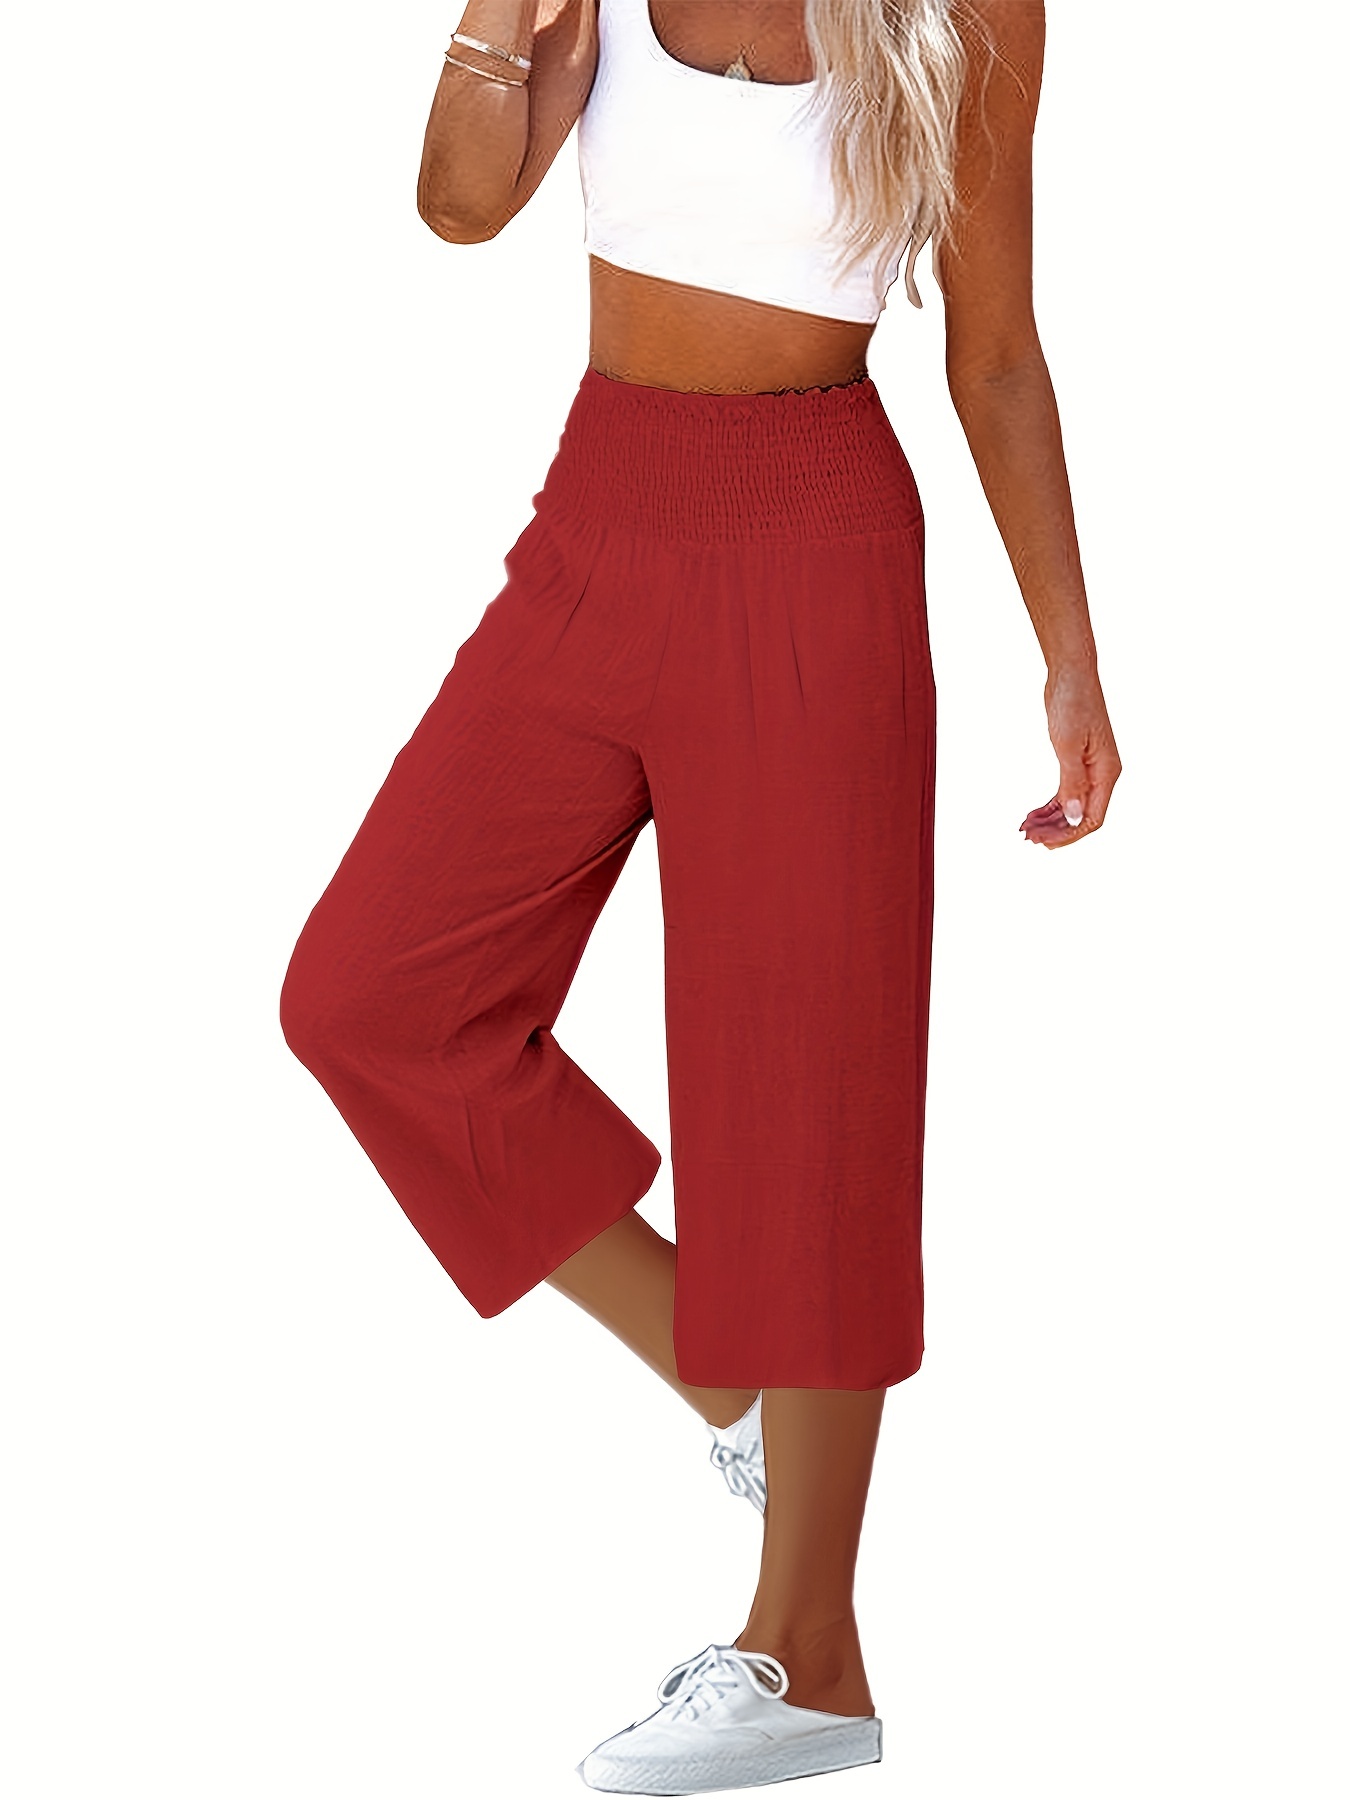 Capri Pants for Women Fashion Solid Color With Pockets Plus Size Cotton  Linen Drawstring Wide leg Casual Loose High Waist Capri Pants